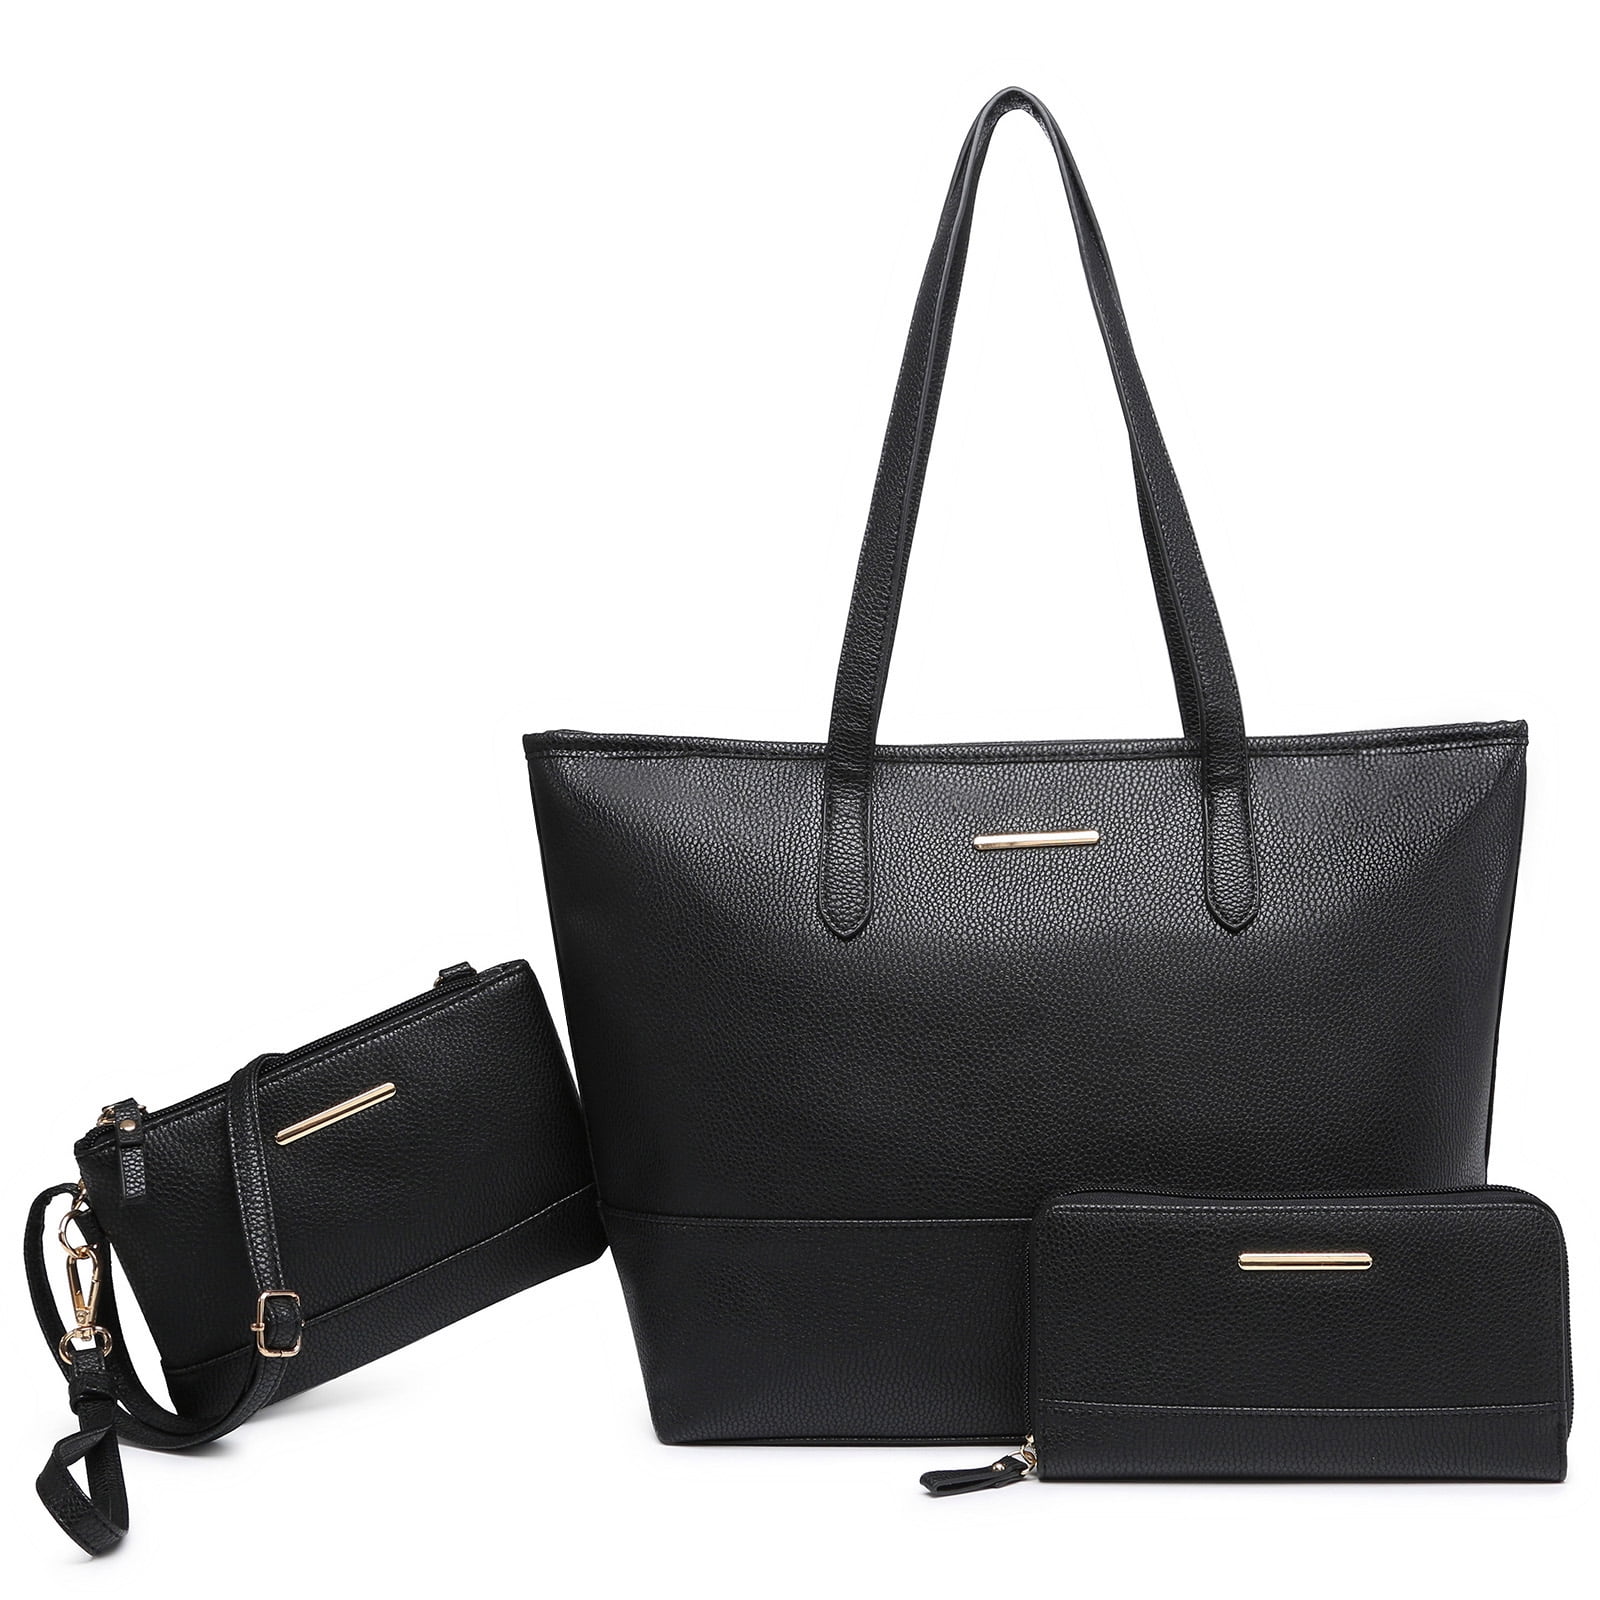 M Marco Women's Handbag 3pcs Set Fashion Tote Bag with Matching Satchel ...